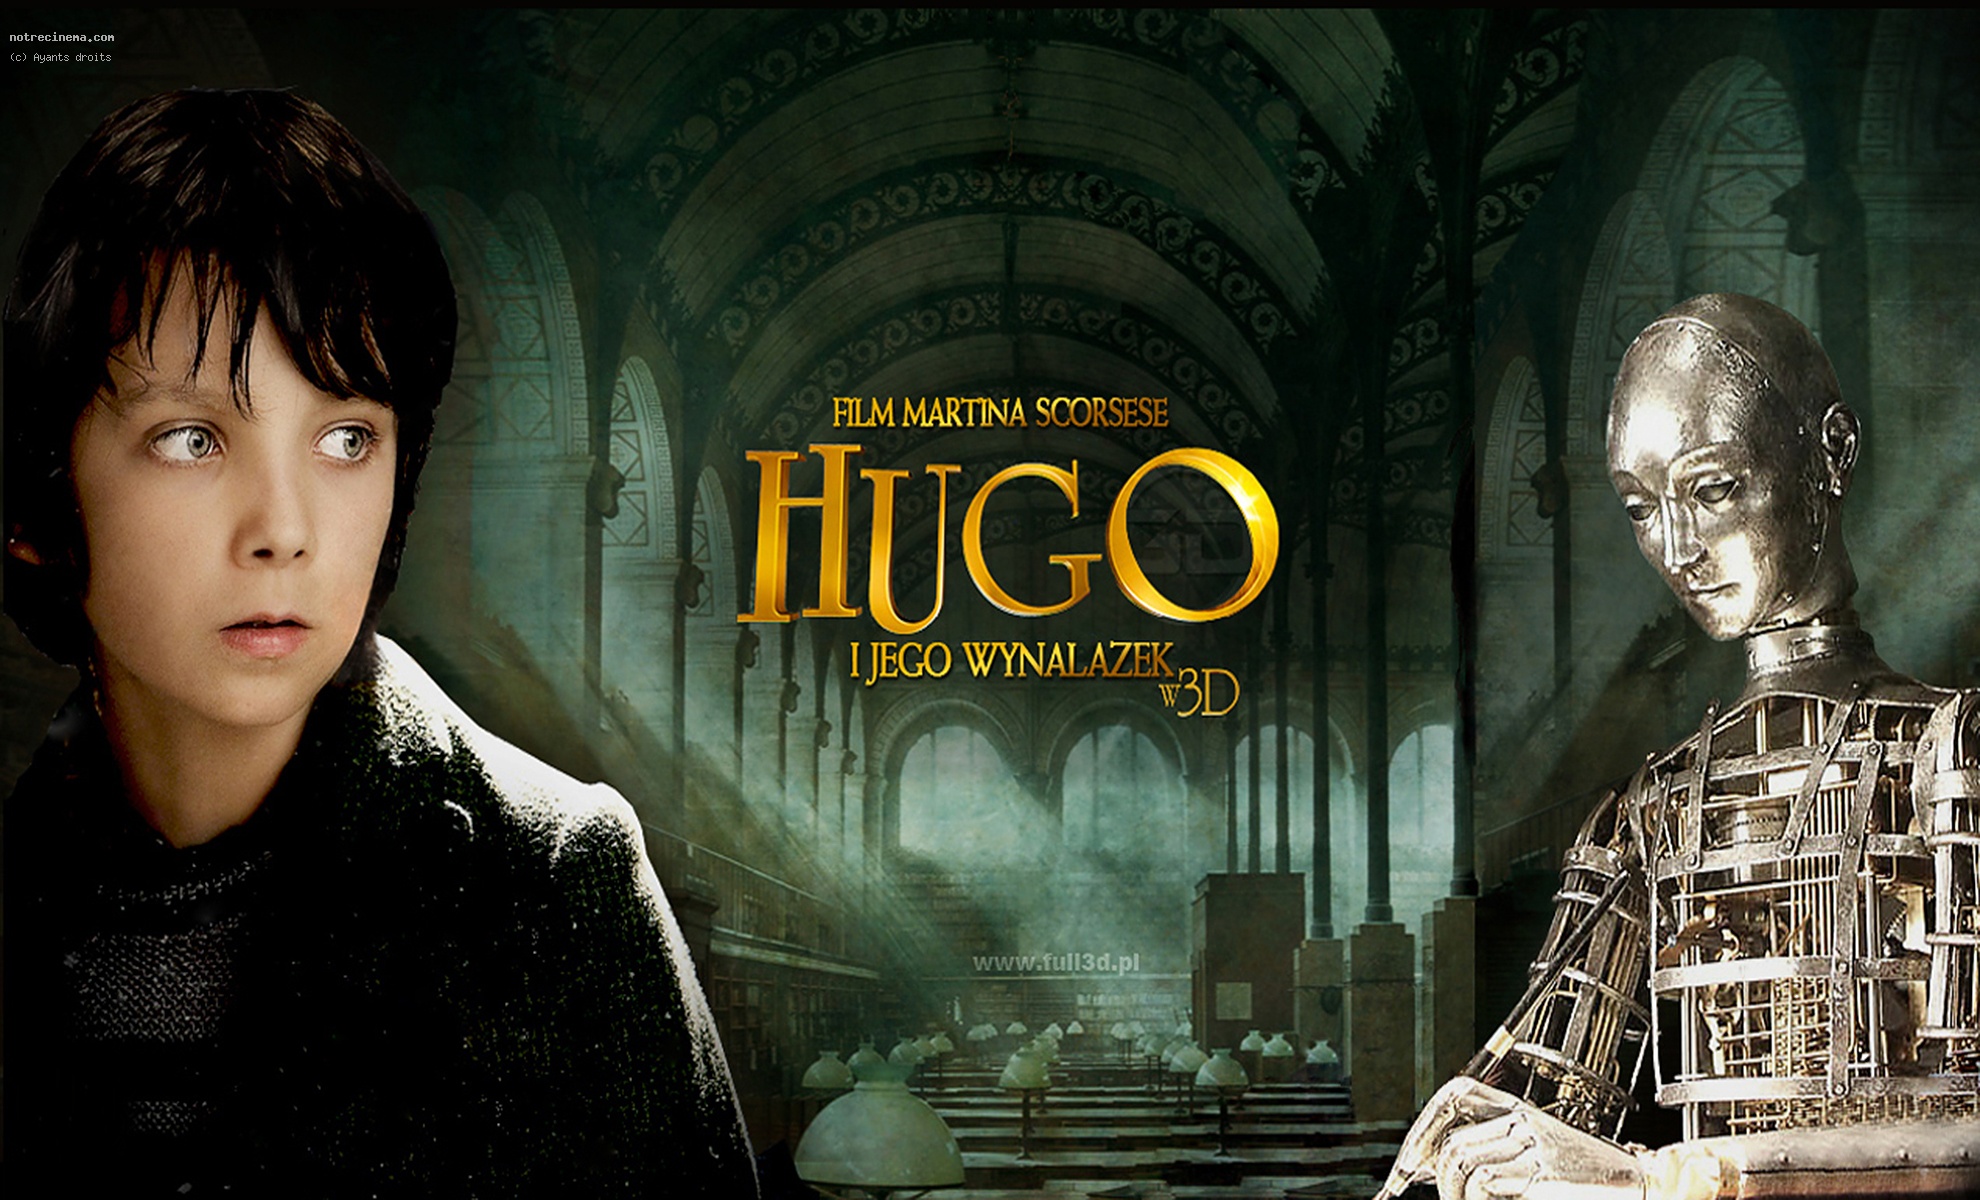 Nice Images Collection: Hugo Desktop Wallpapers